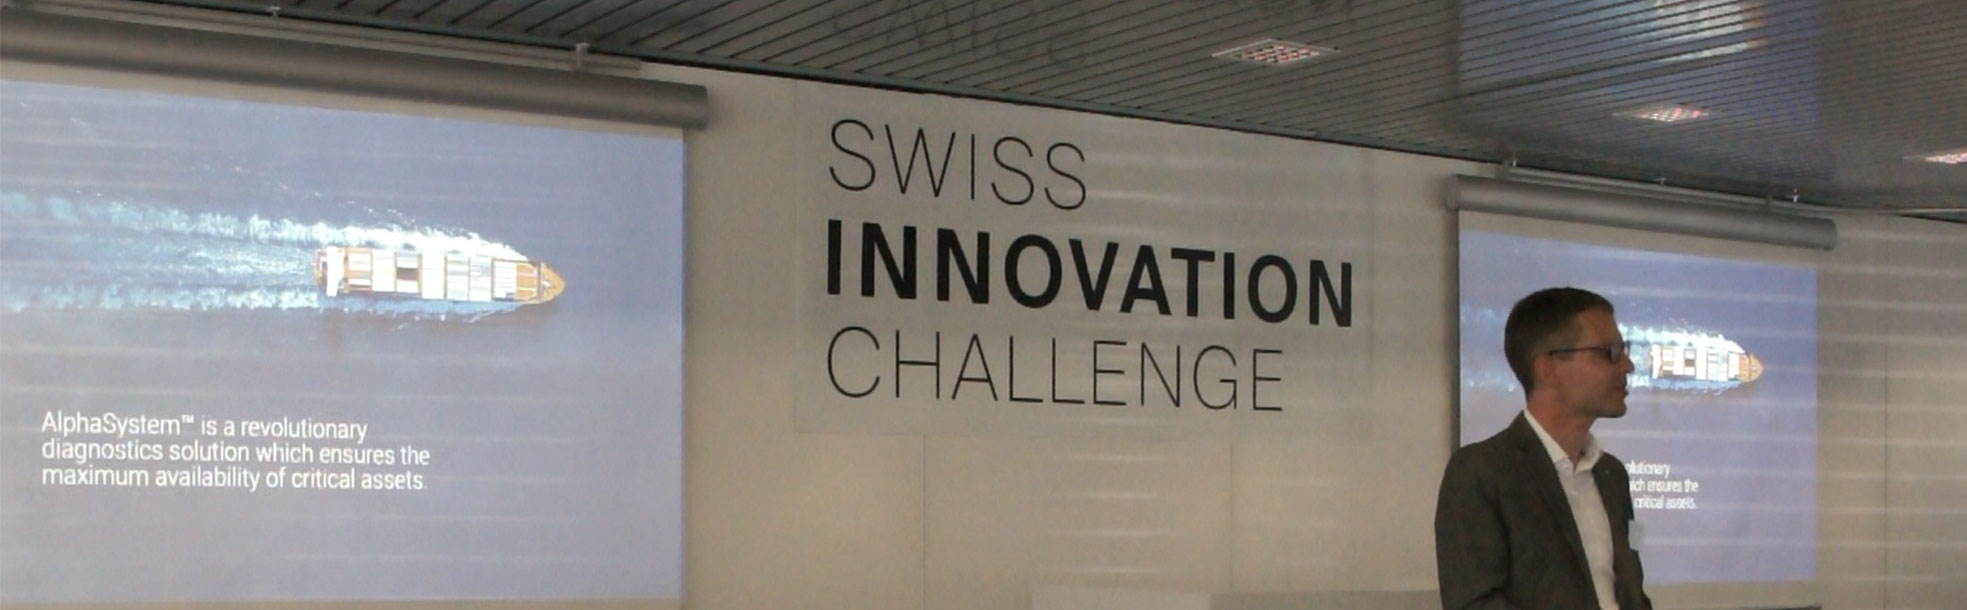  Swiss Innovation Challenge